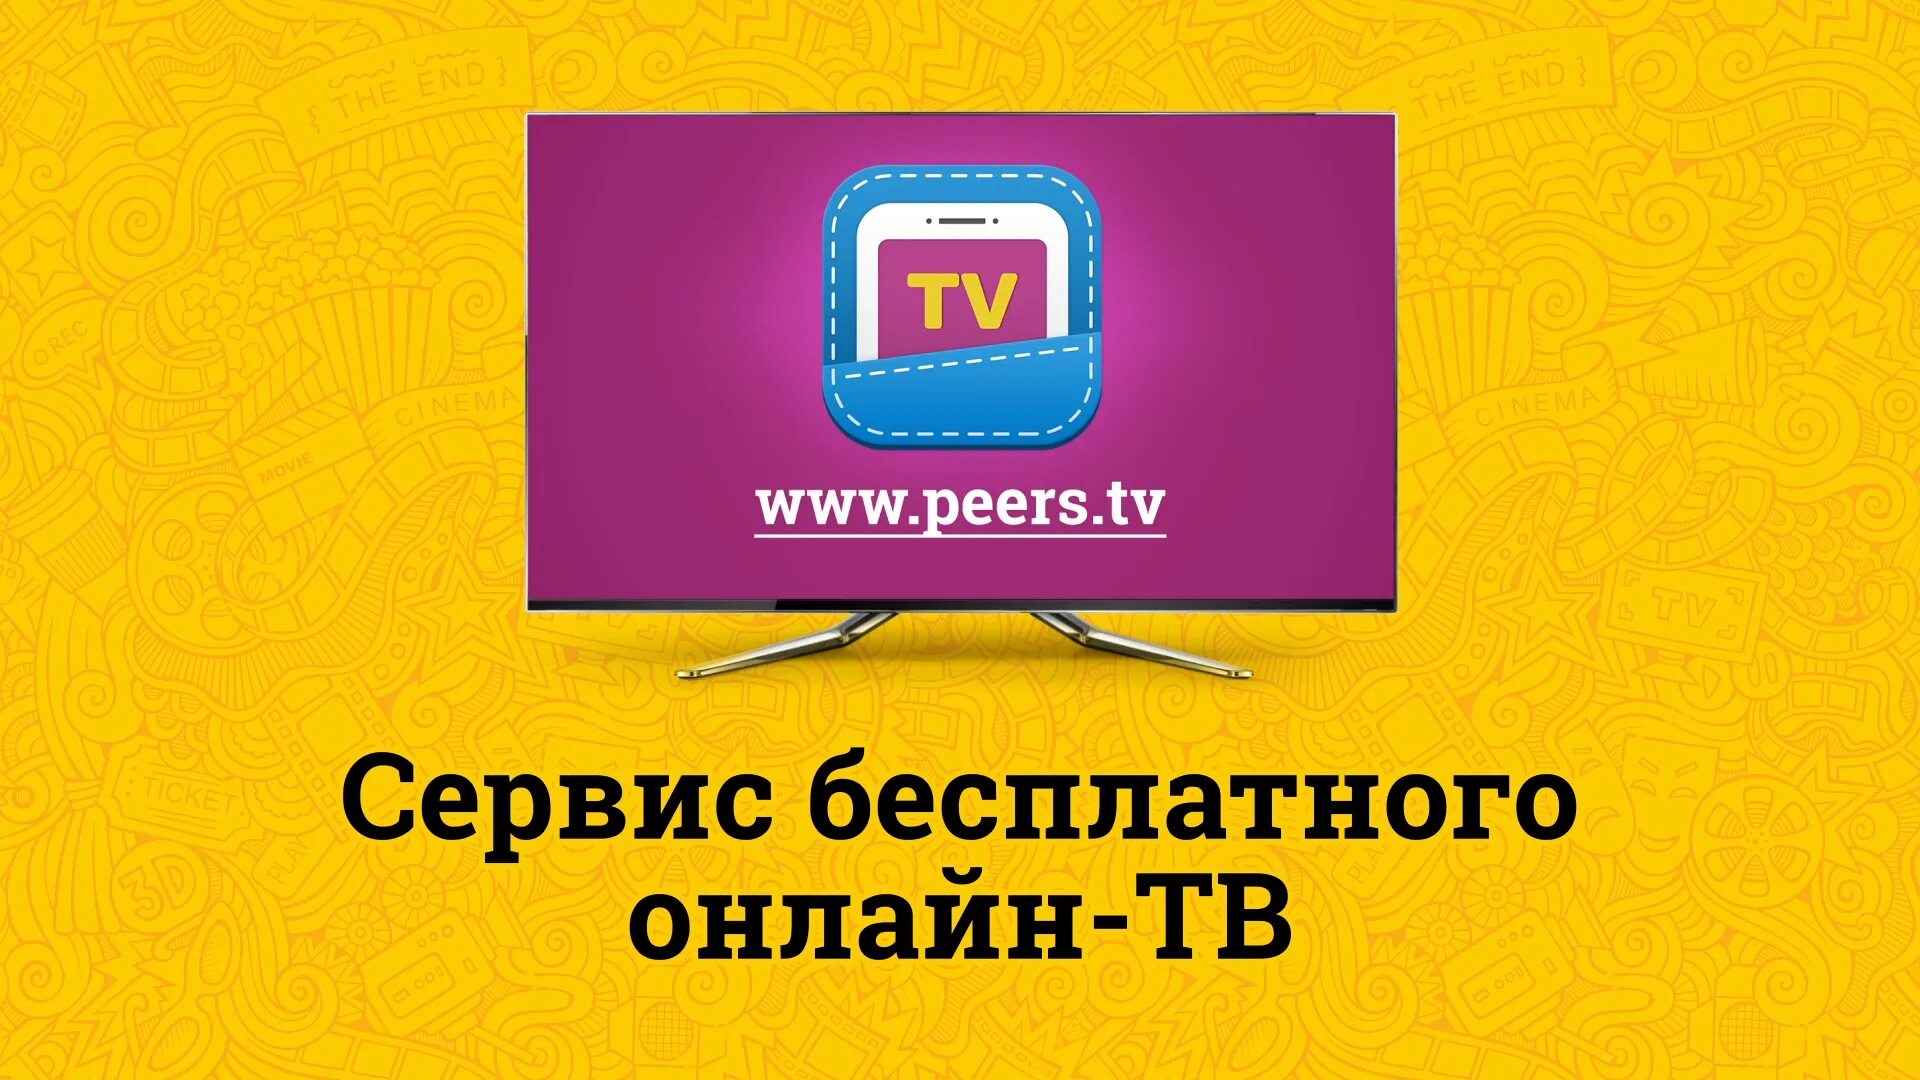 Пирс ТВ. Peers TV логотип. Перс ТВ. Пирс ТВ каналы.